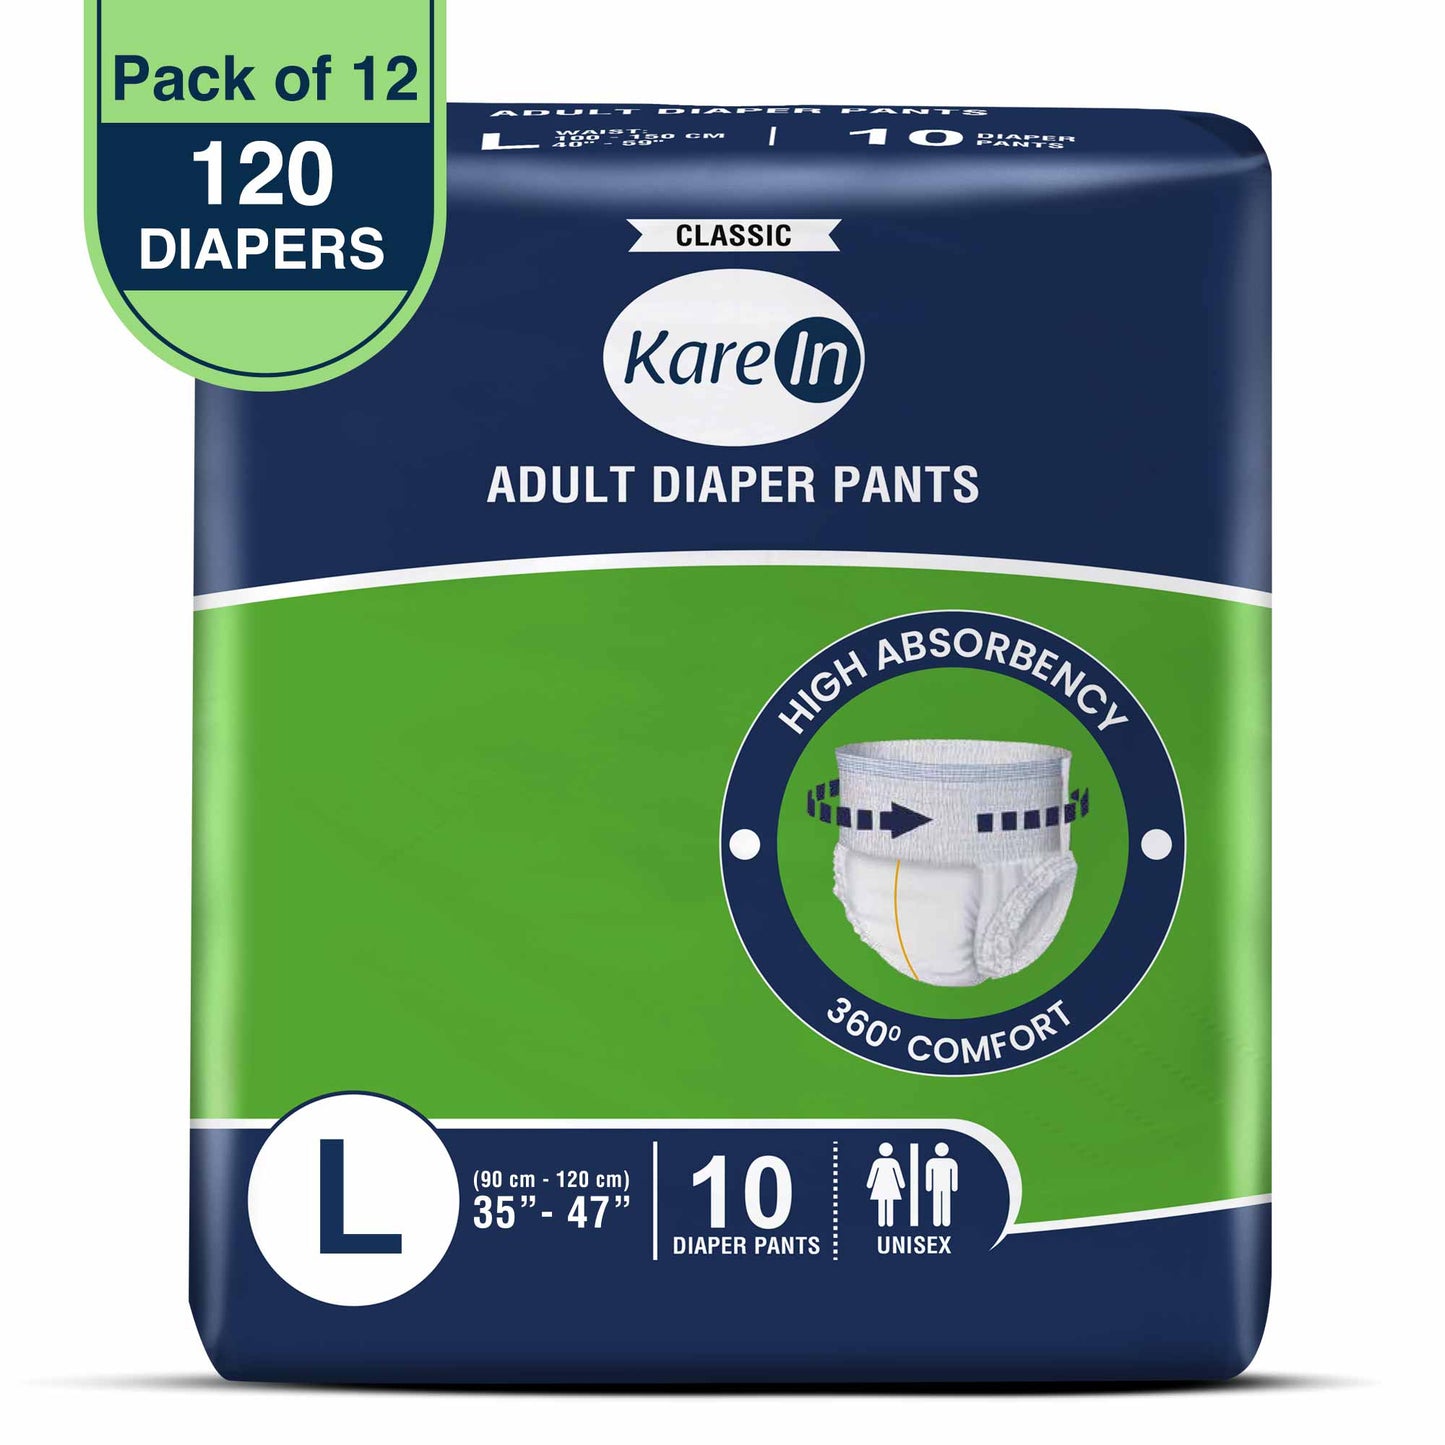 KareIn Classic Adult Diaper Pants, Large 90-120 Cm (35"- 47"), Unisex, Leakproof, Elastic Waist, Wetness, Indicator, Pack of 12, 120 Count